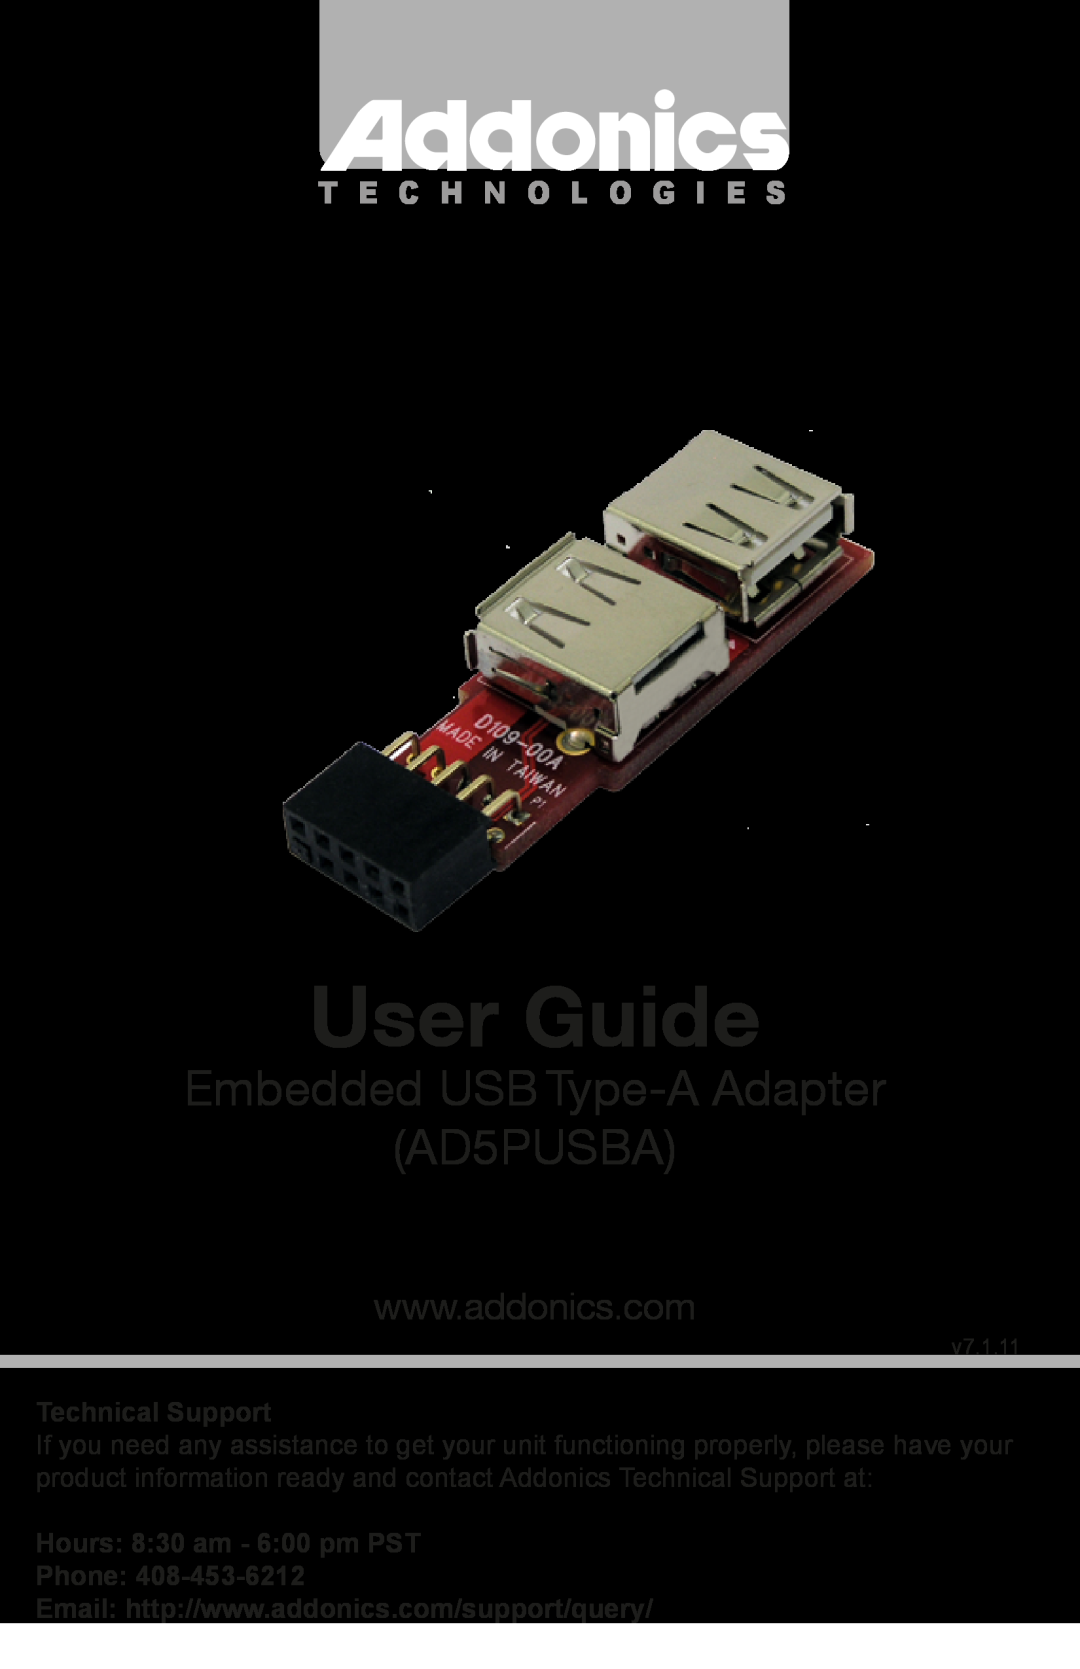 Addonics Technologies manual User Guide, Embedded USB Type-A Adapter AD5PUSBA, T E C H N O L O G I E S, v7.1.11 